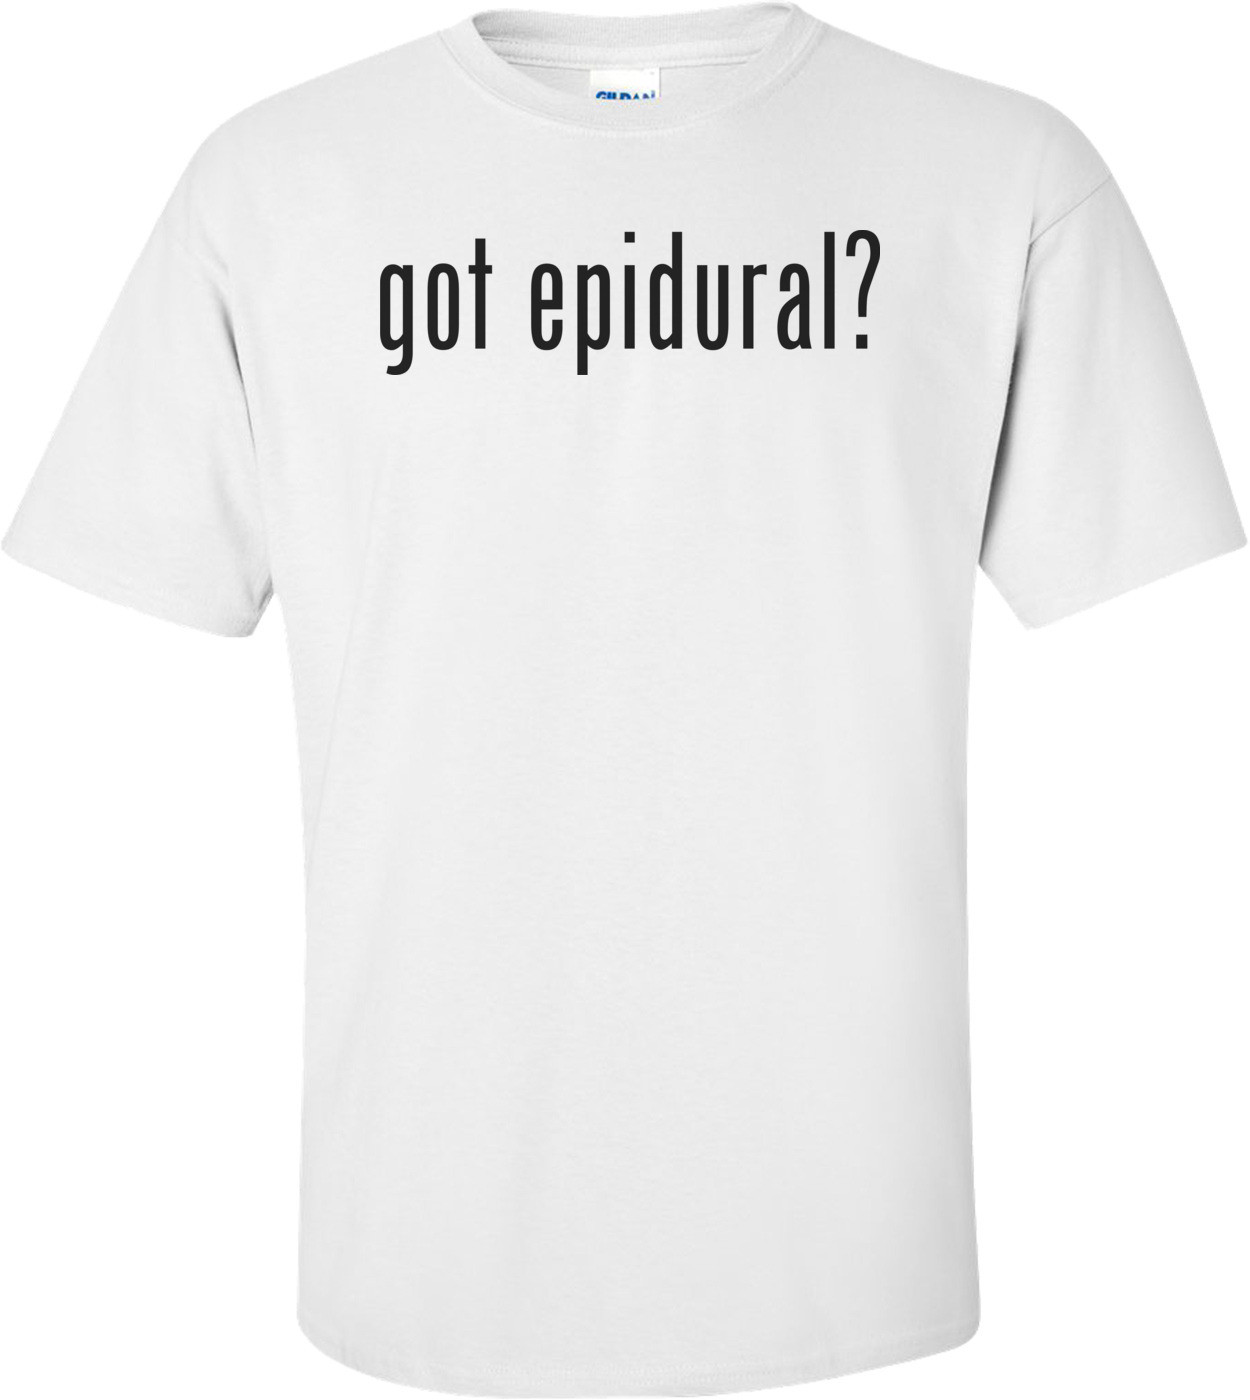 Got Epidural? Maternity Shirt